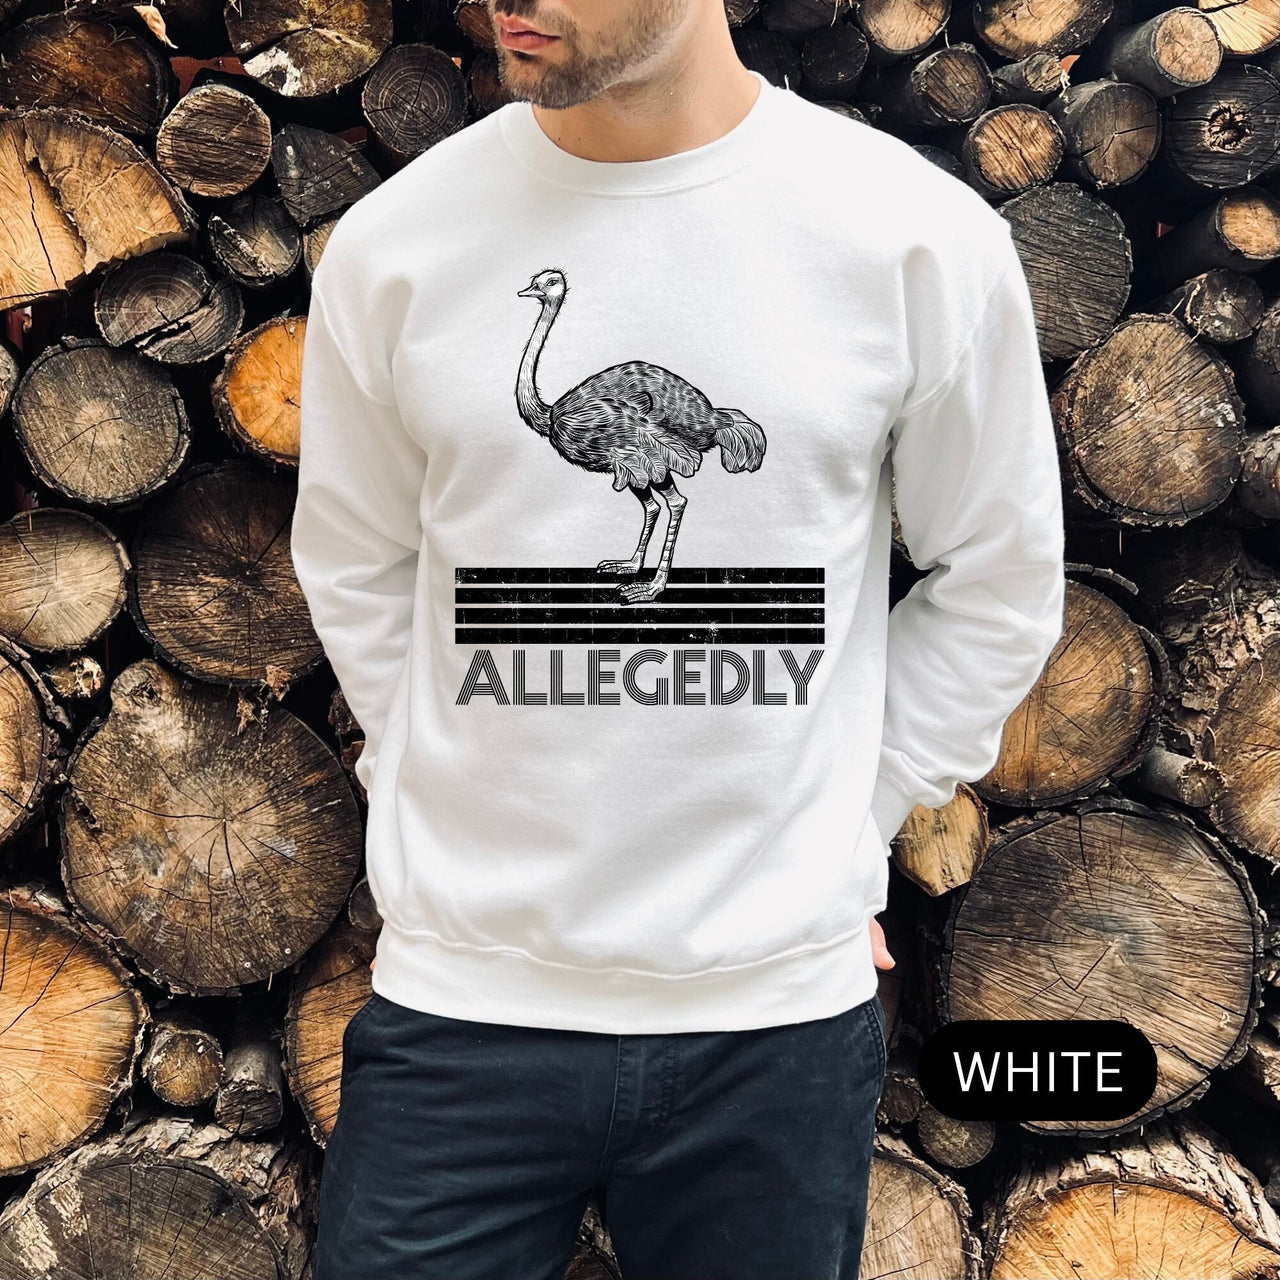 Allegedly Ostrich Pullover Sweatshirt Gift for Him